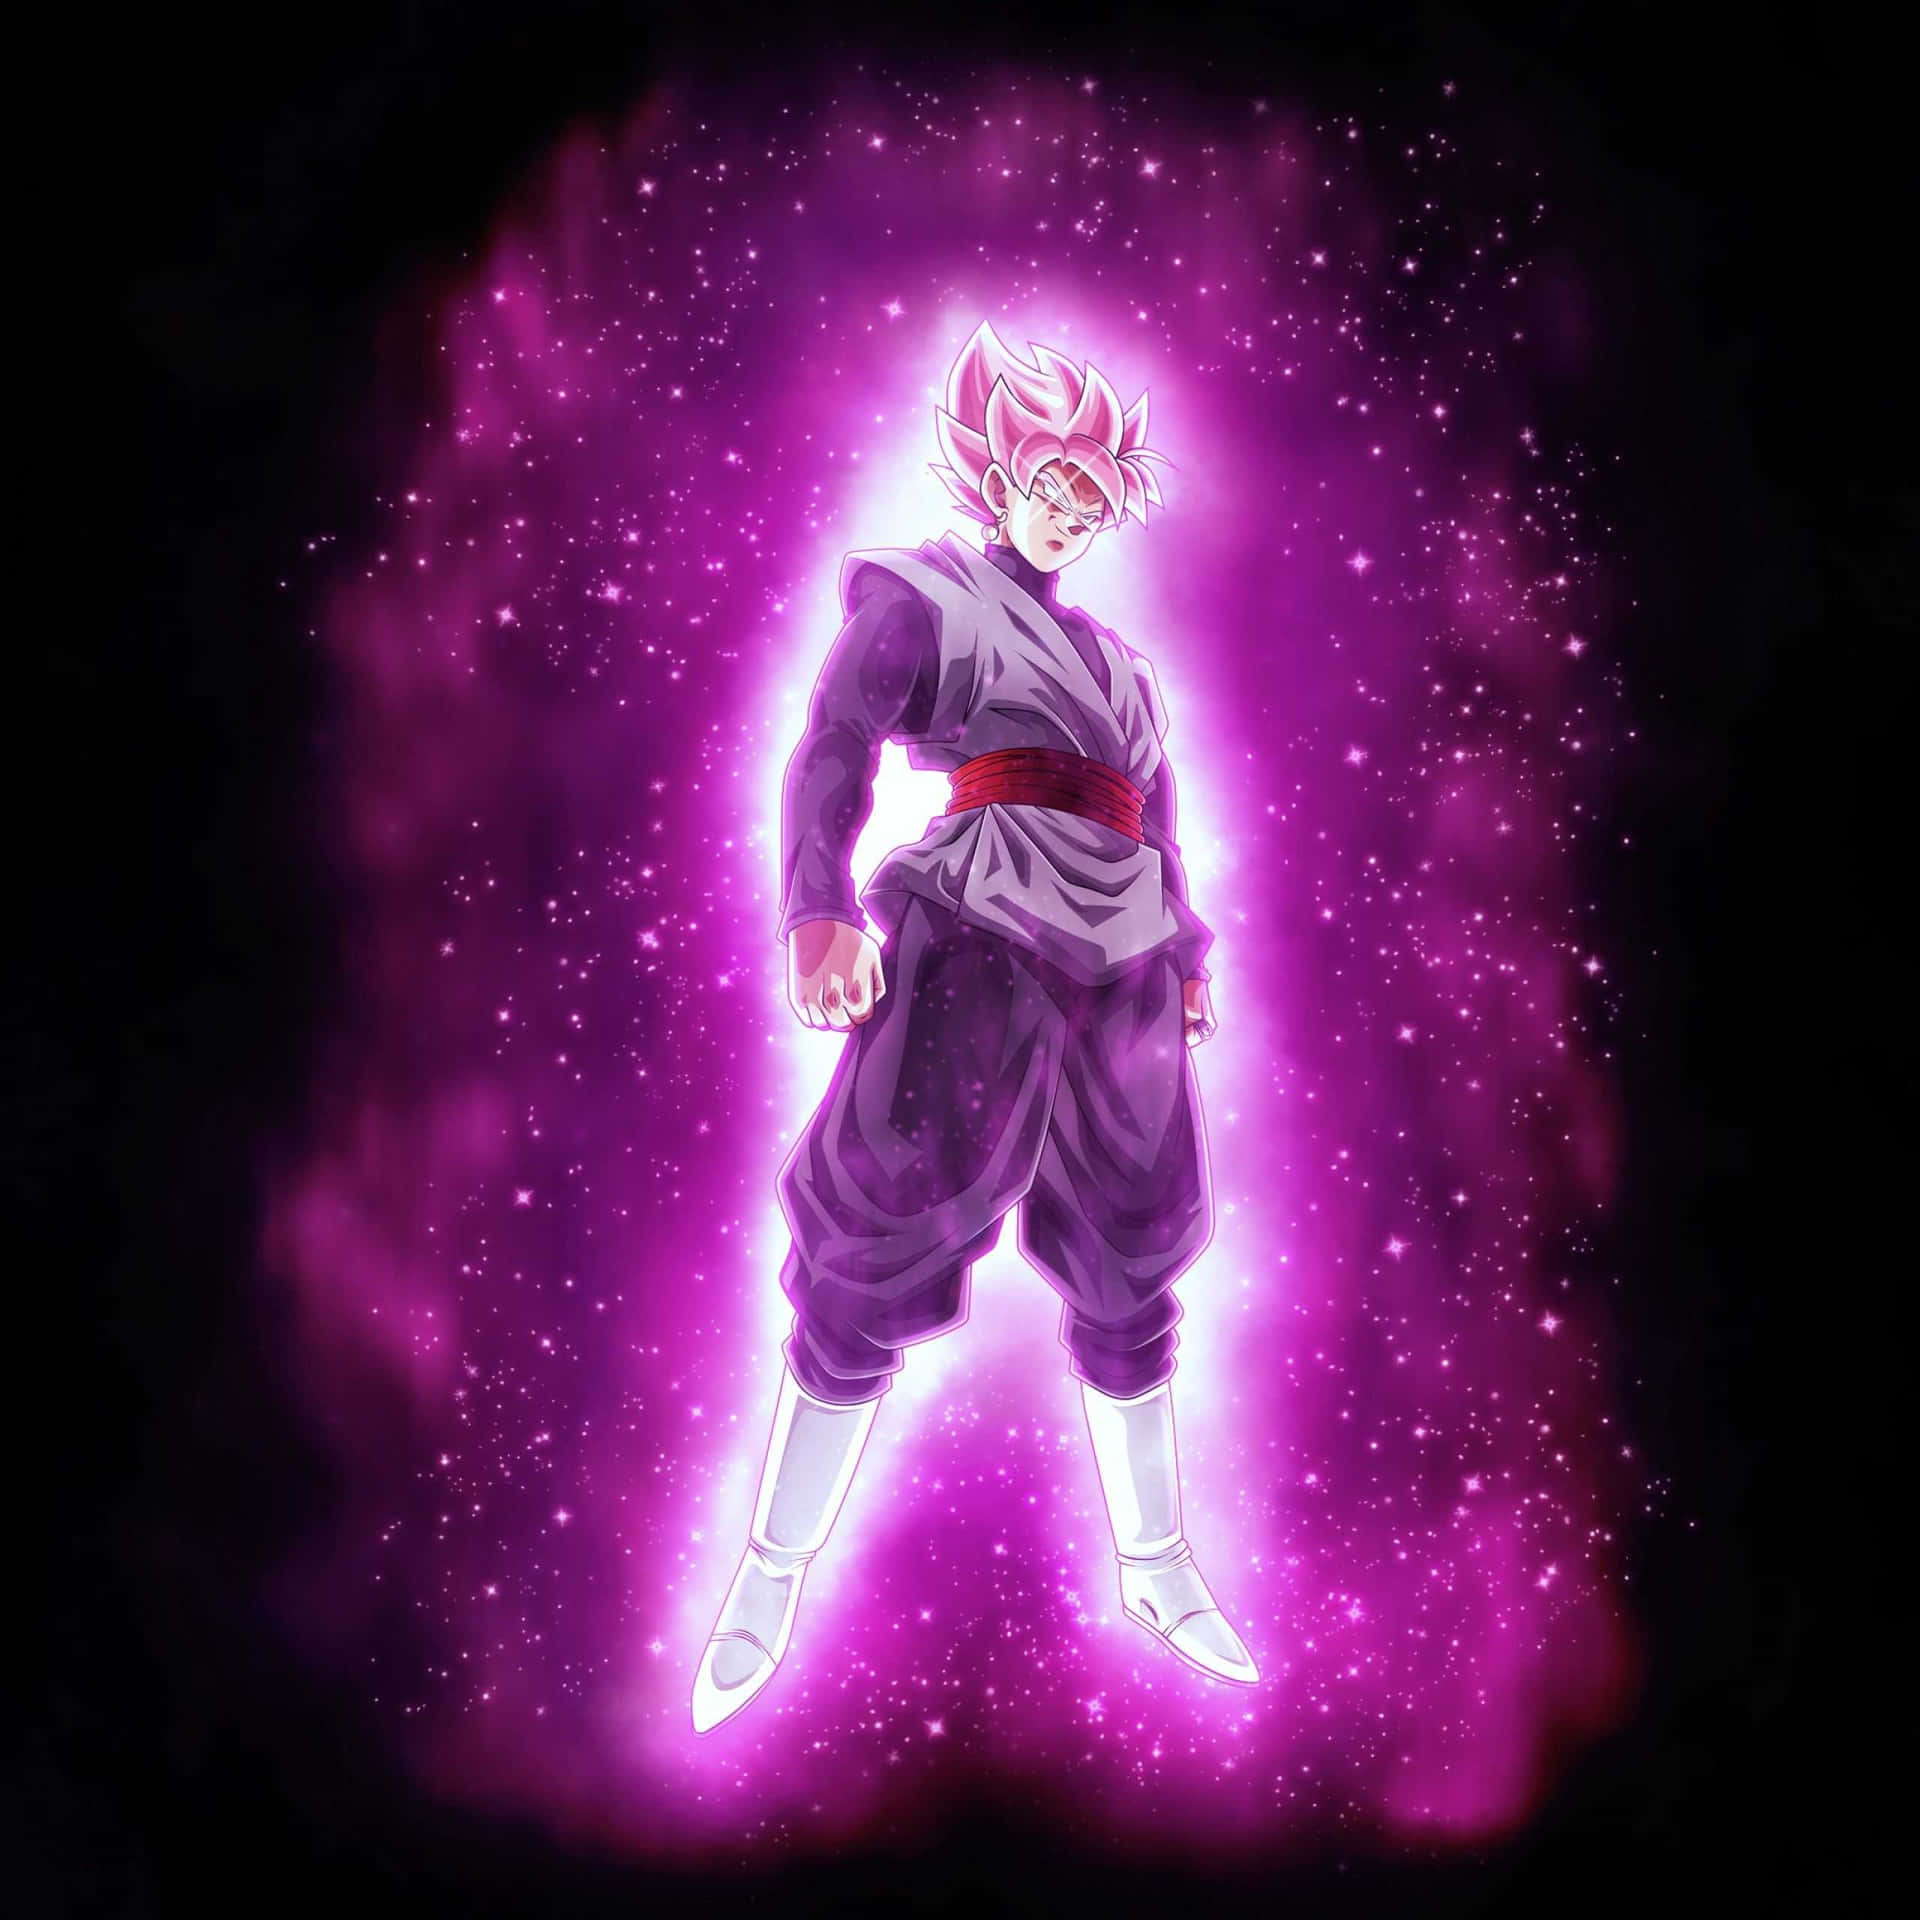 “Goku Black Supreme: Becoming The Ultimate Warrior” Wallpaper